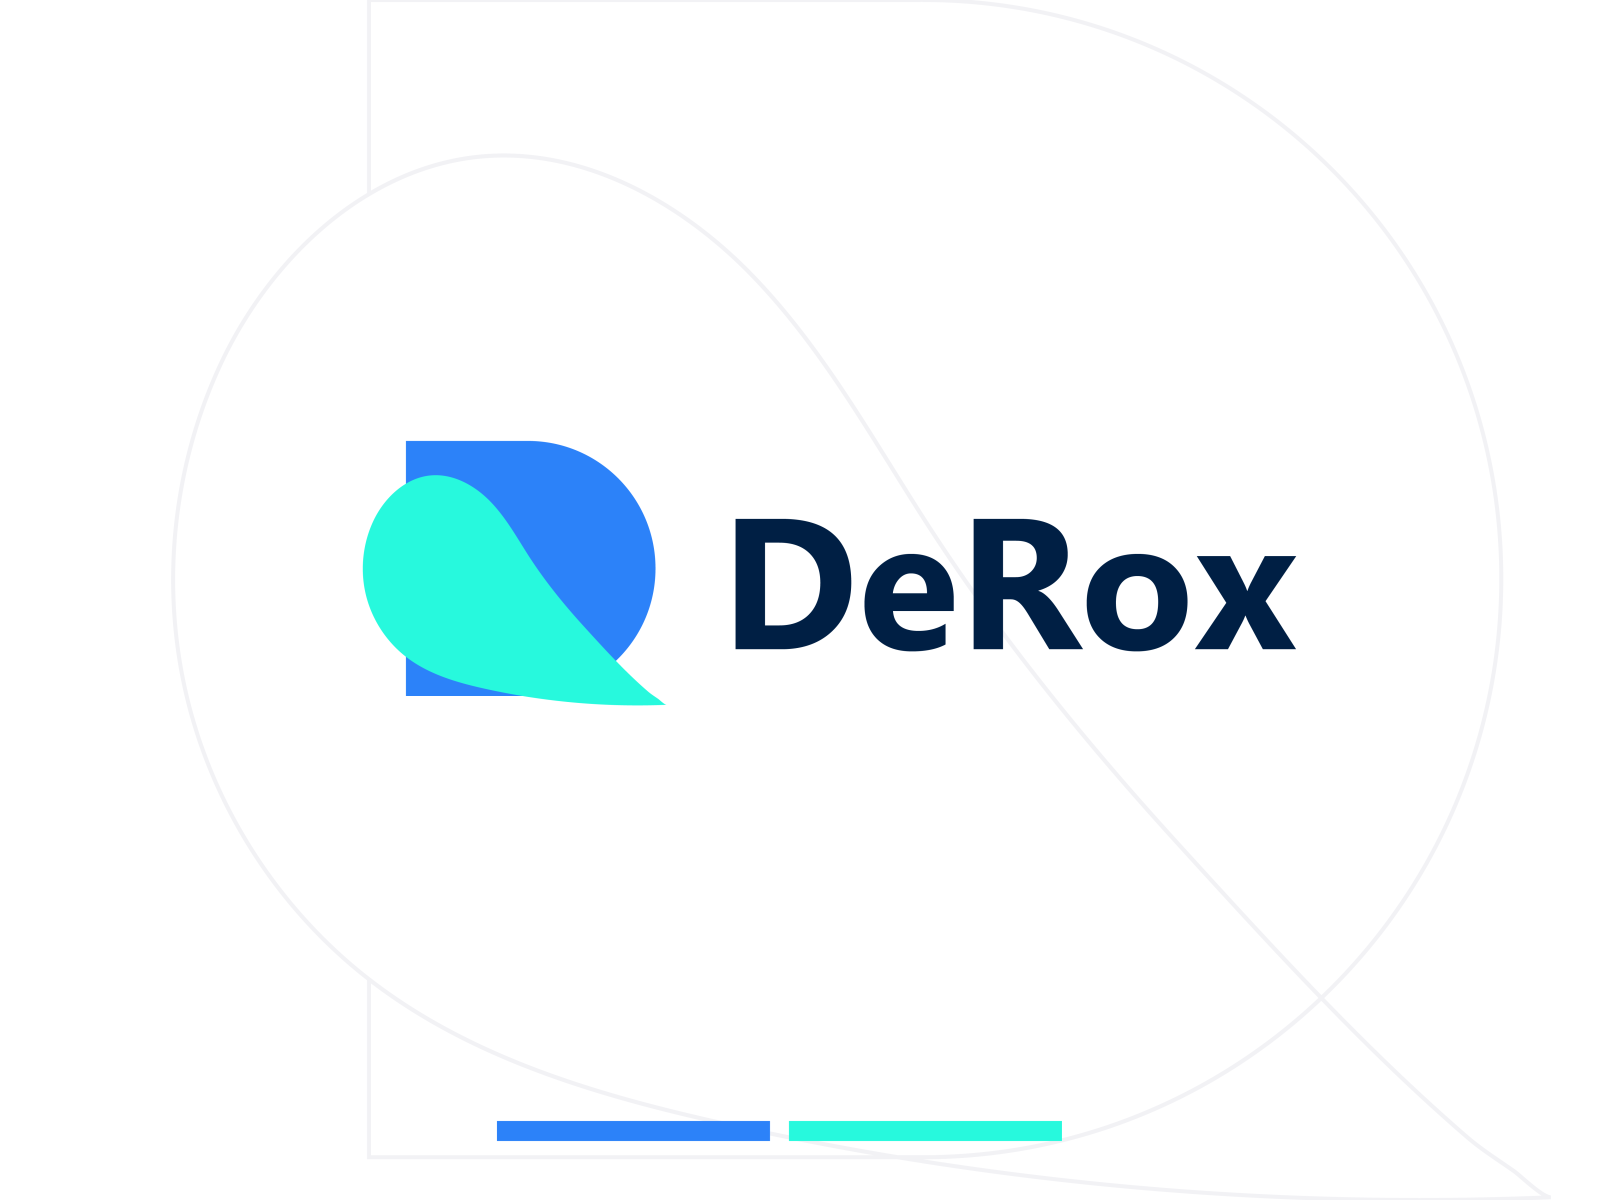 DeRex Logo Design by Abu Hena Rasel on Dribbble